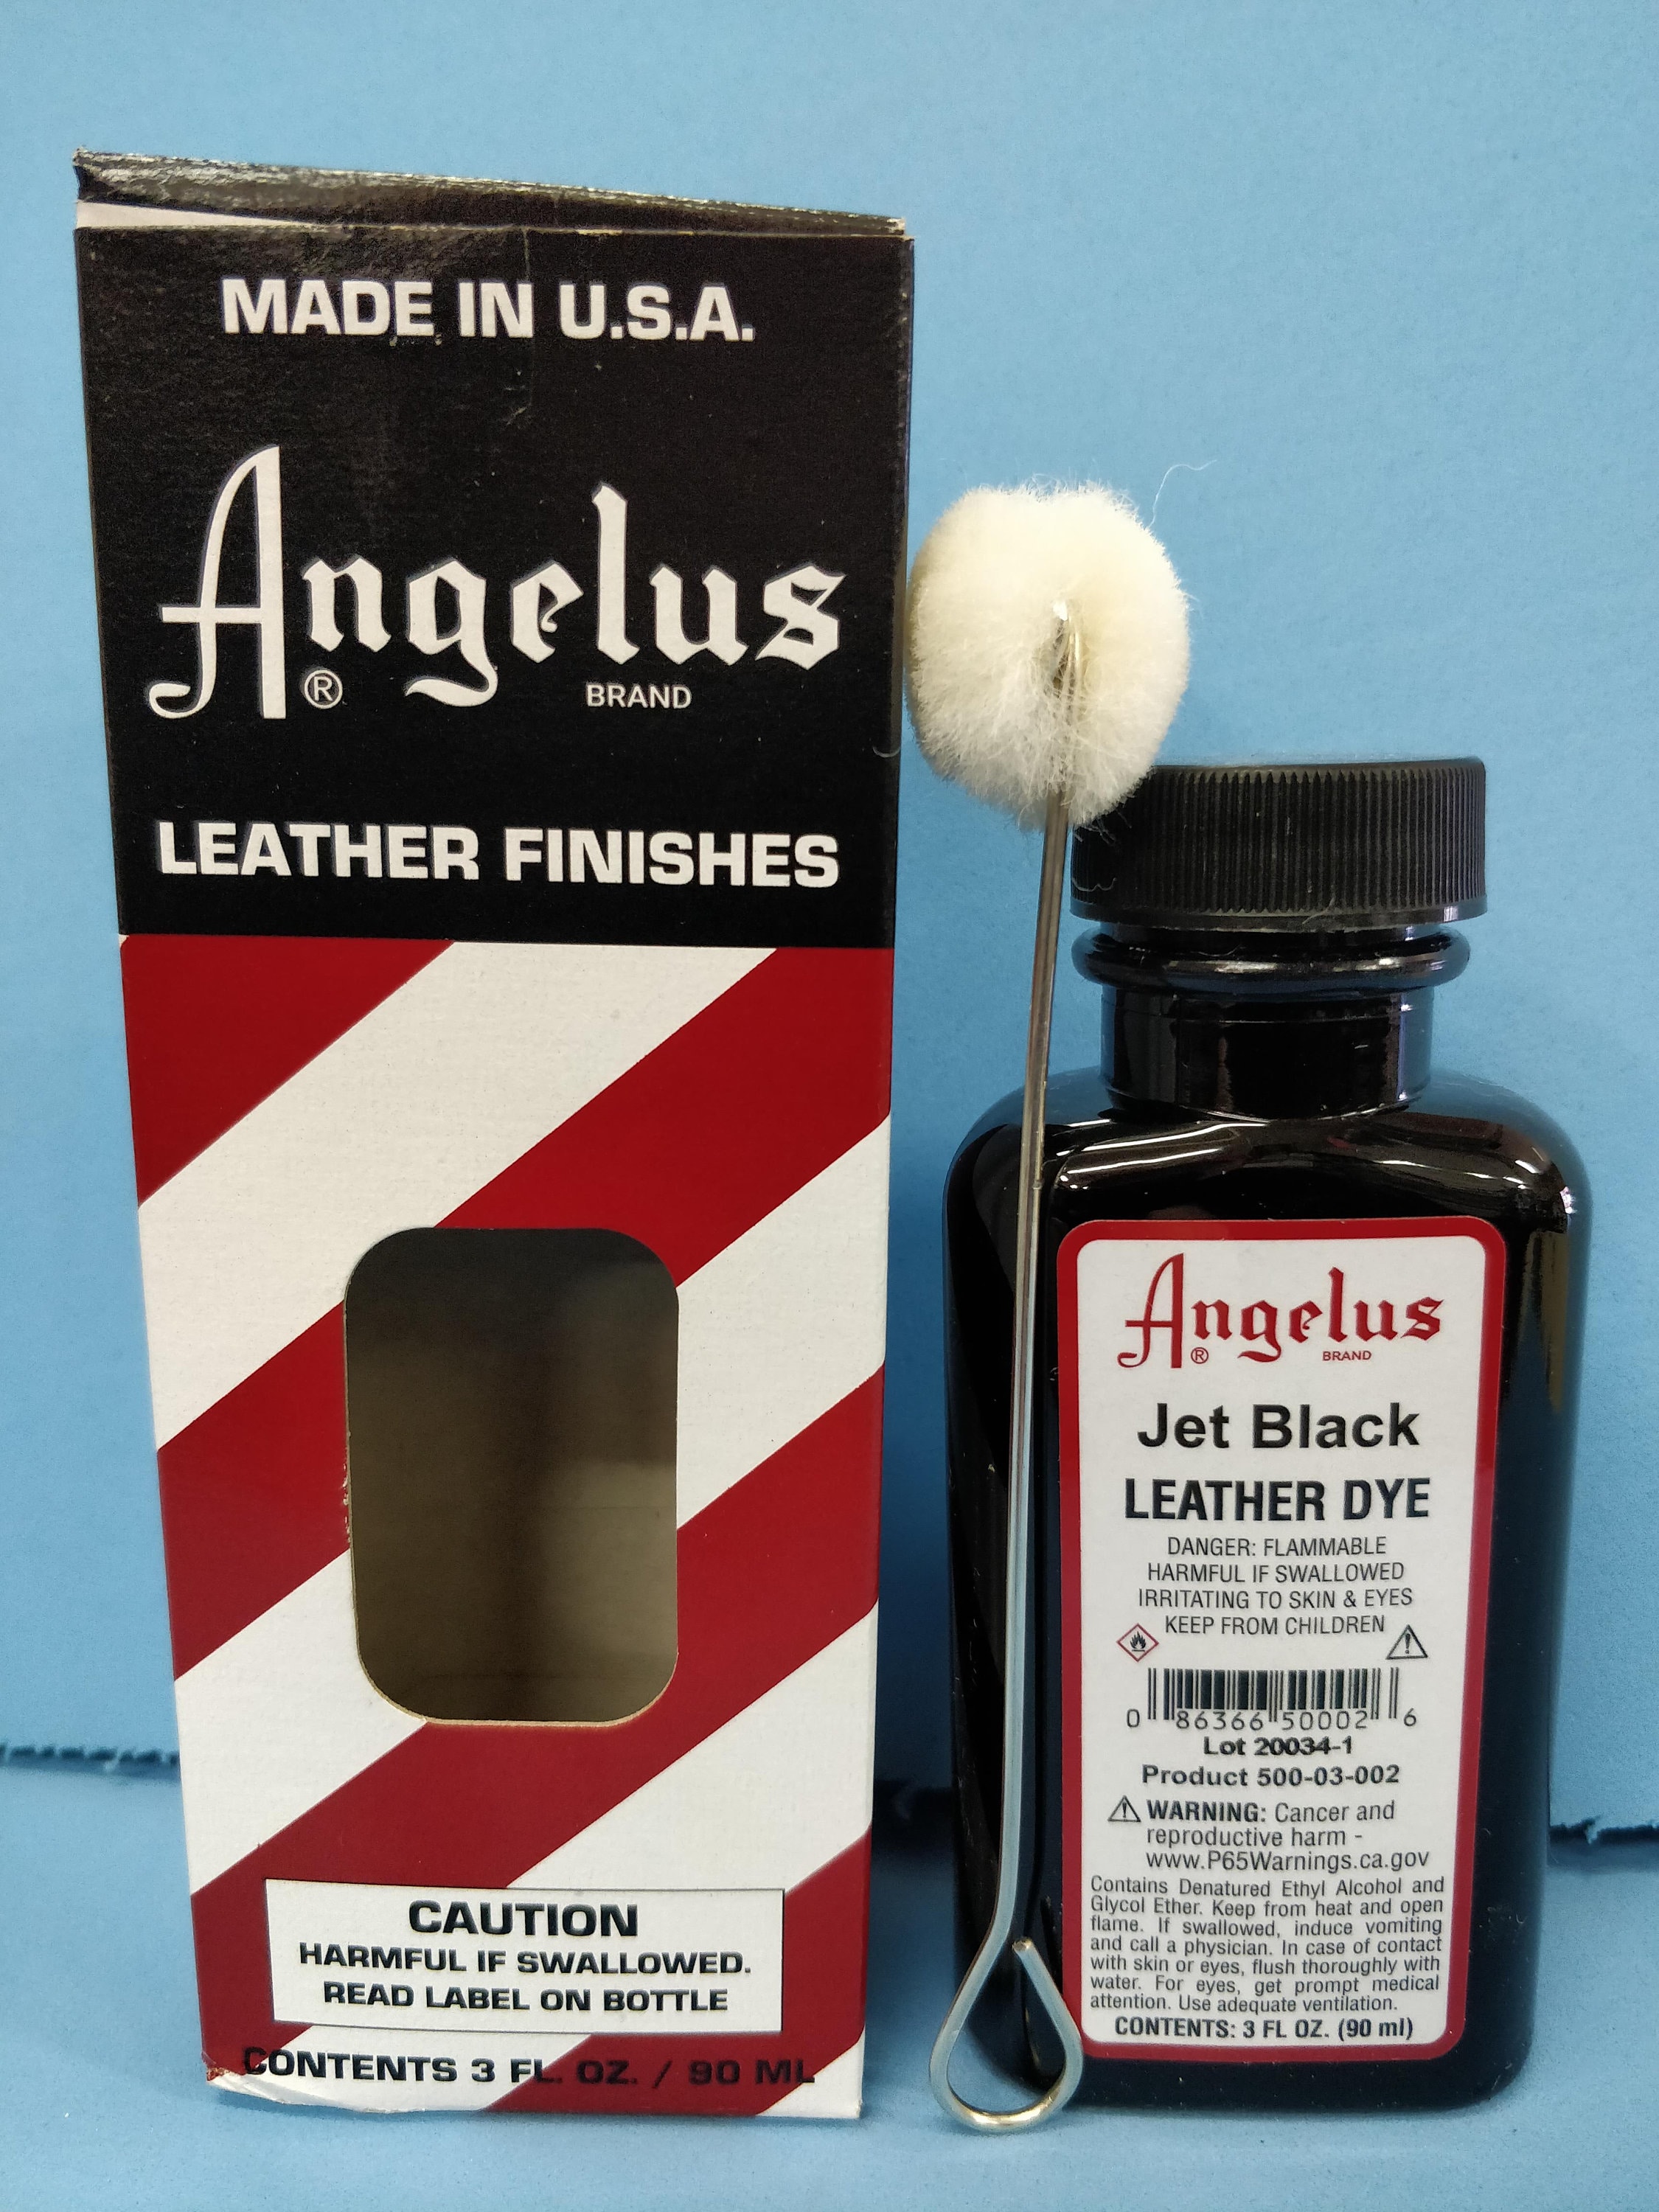 Angelus Leather Dye 3 oz - Light Brown